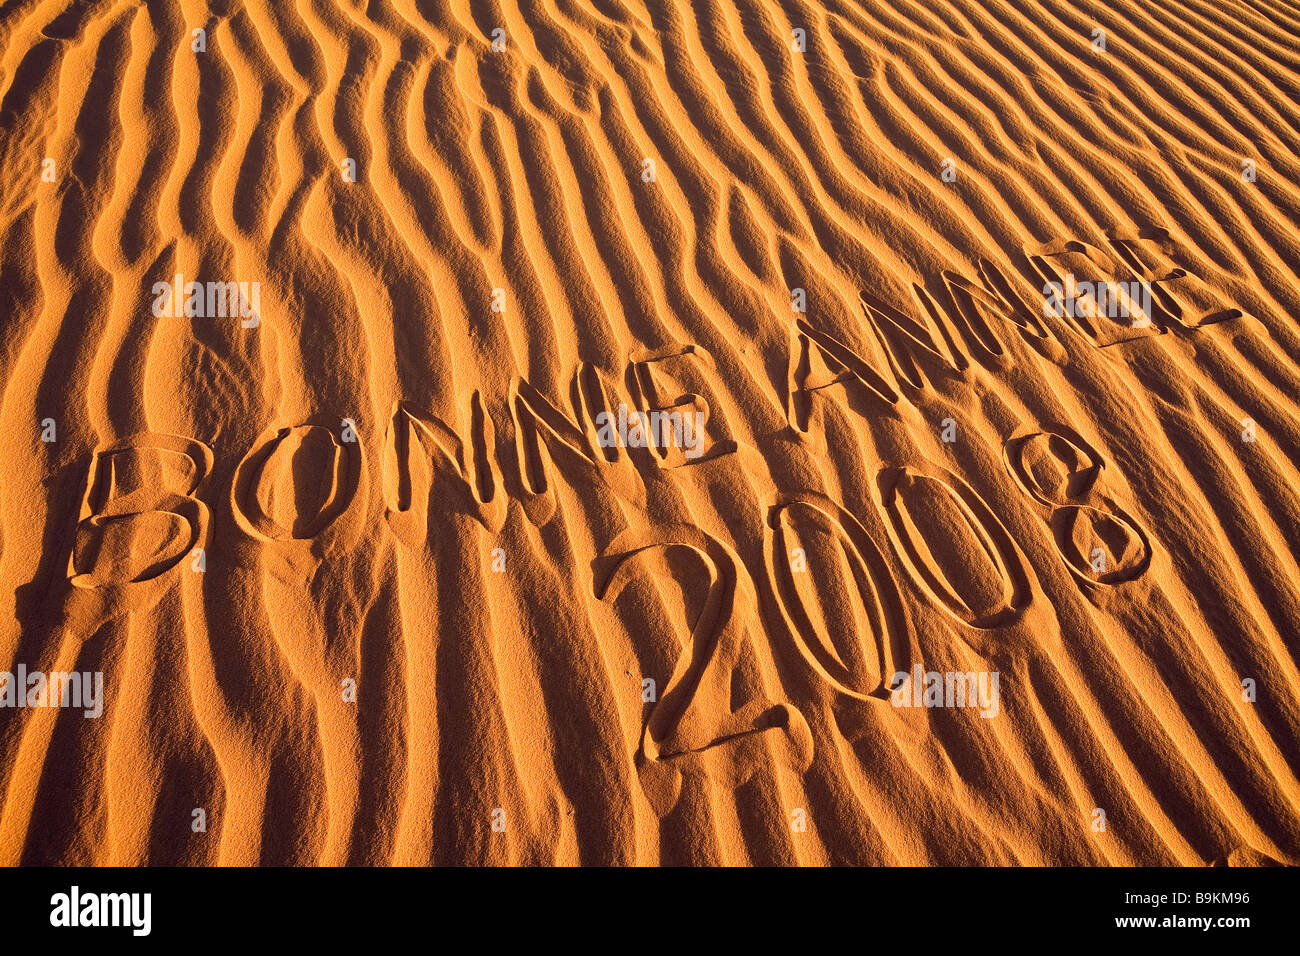 Mauritania, Adrar, Happy New Year 2008 written in the sand Stock Photo